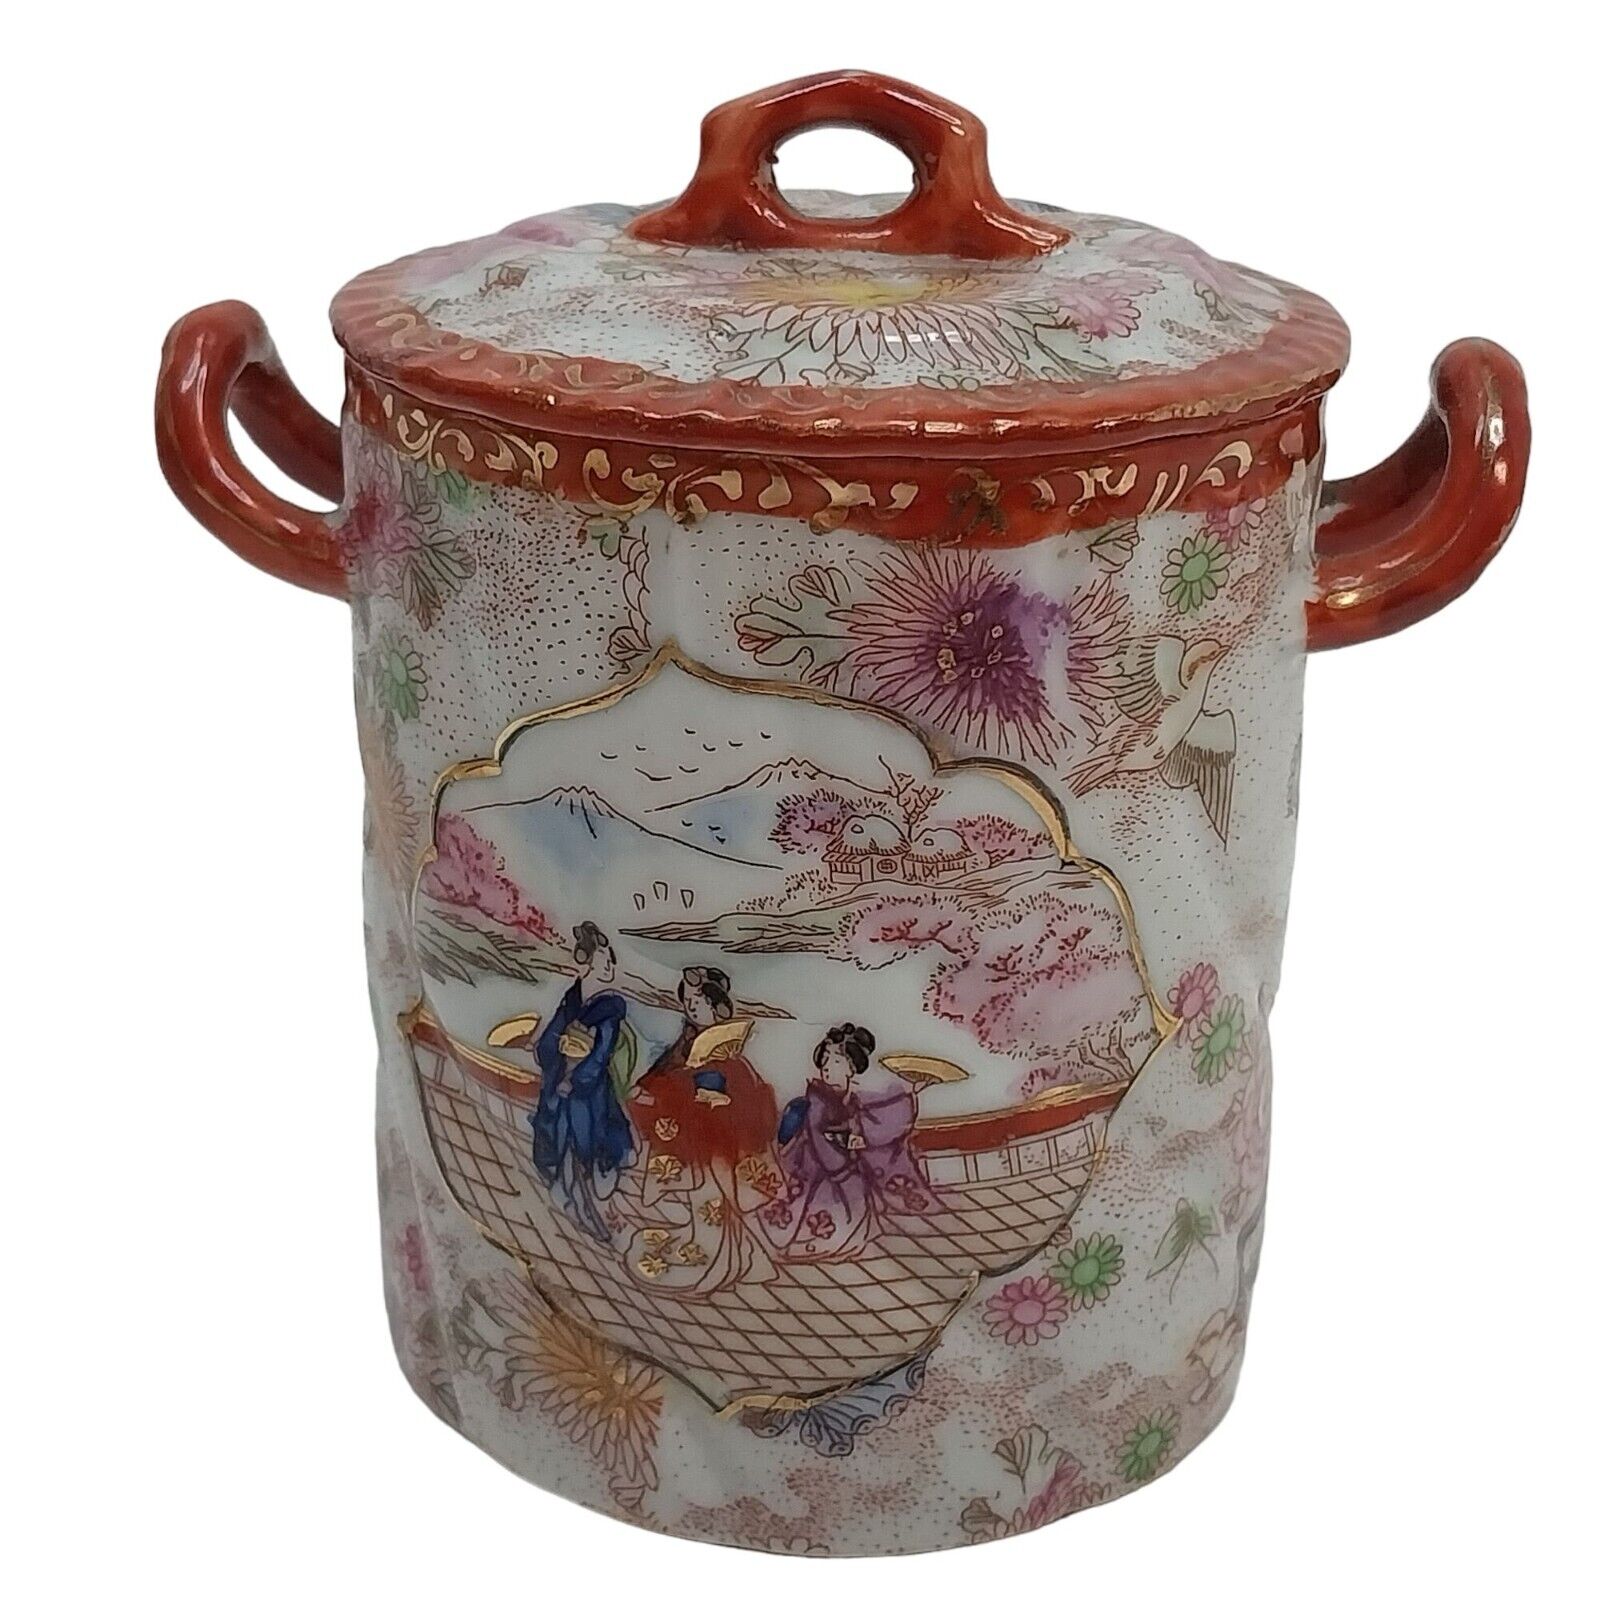 Antique Japanese Condensed Milk Container With Lid Geishas Porcelain